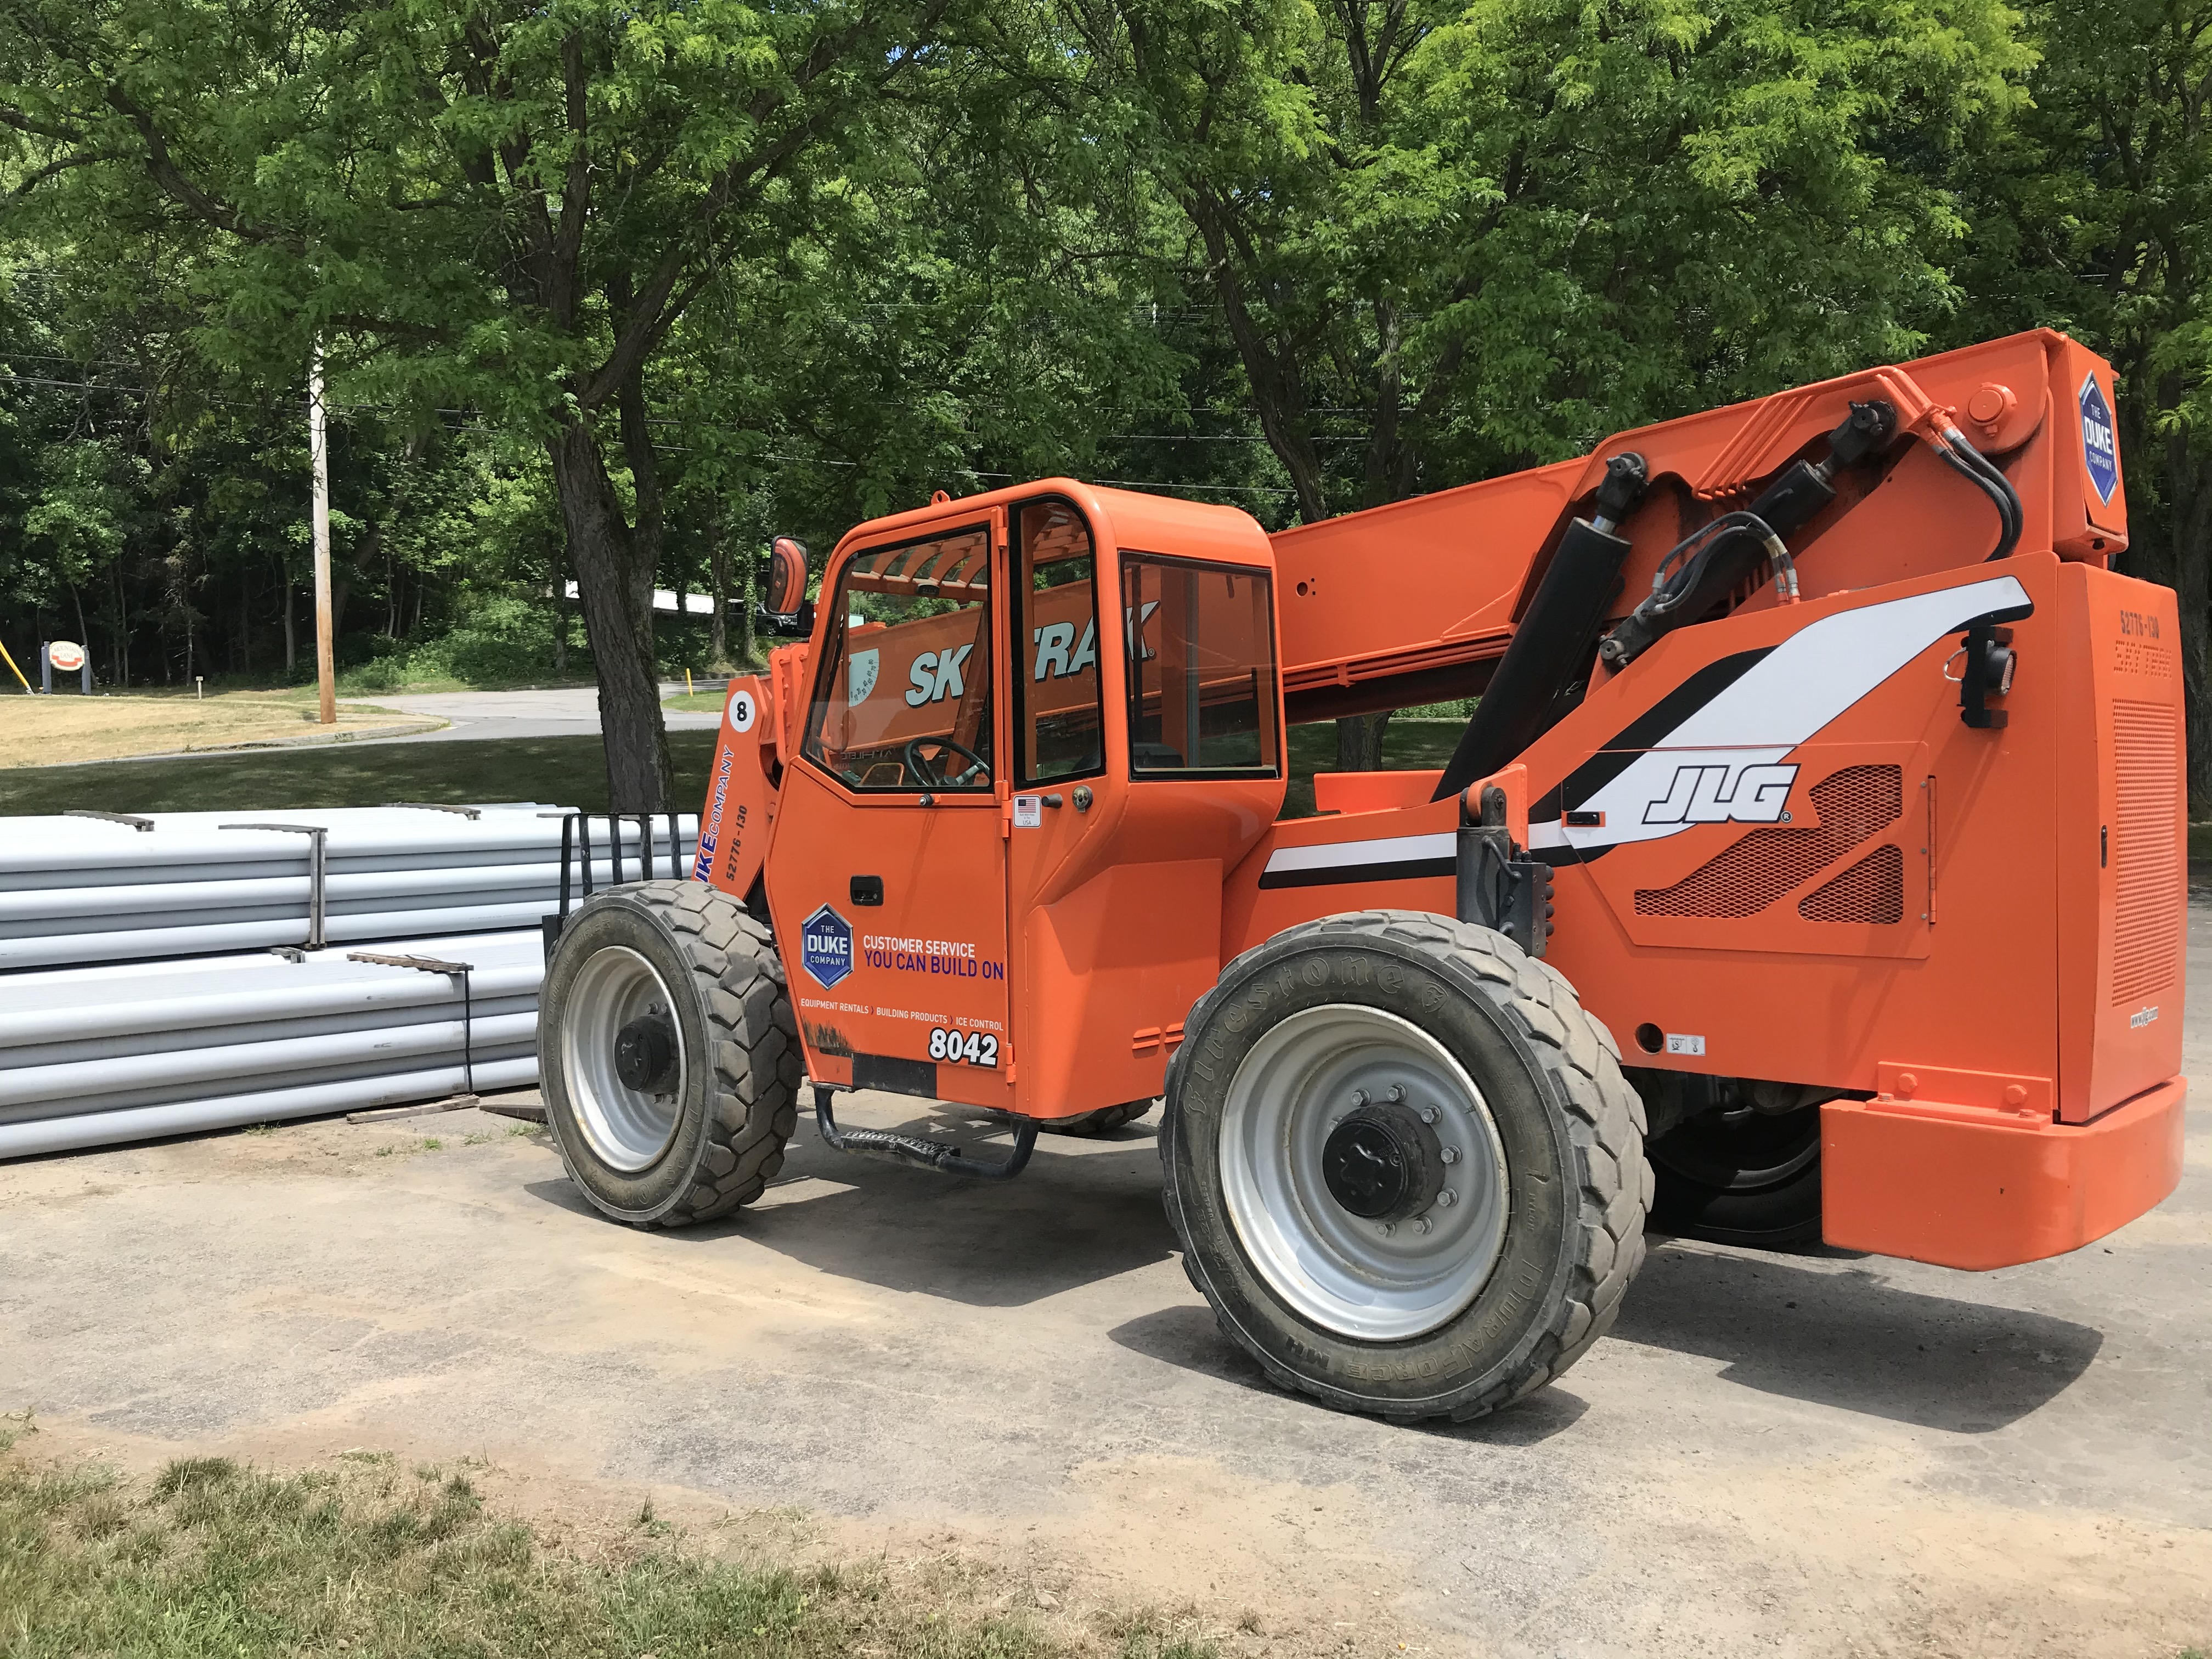 Rent A Powerful 8 000 Pound Reach Forklift In Upstate New York Jlg 8042 Skytrak Telehandler Equipment Rental Tool Rental Rock Salt Roll Off Dumpster Rental Concrete Forms Rochester Ny